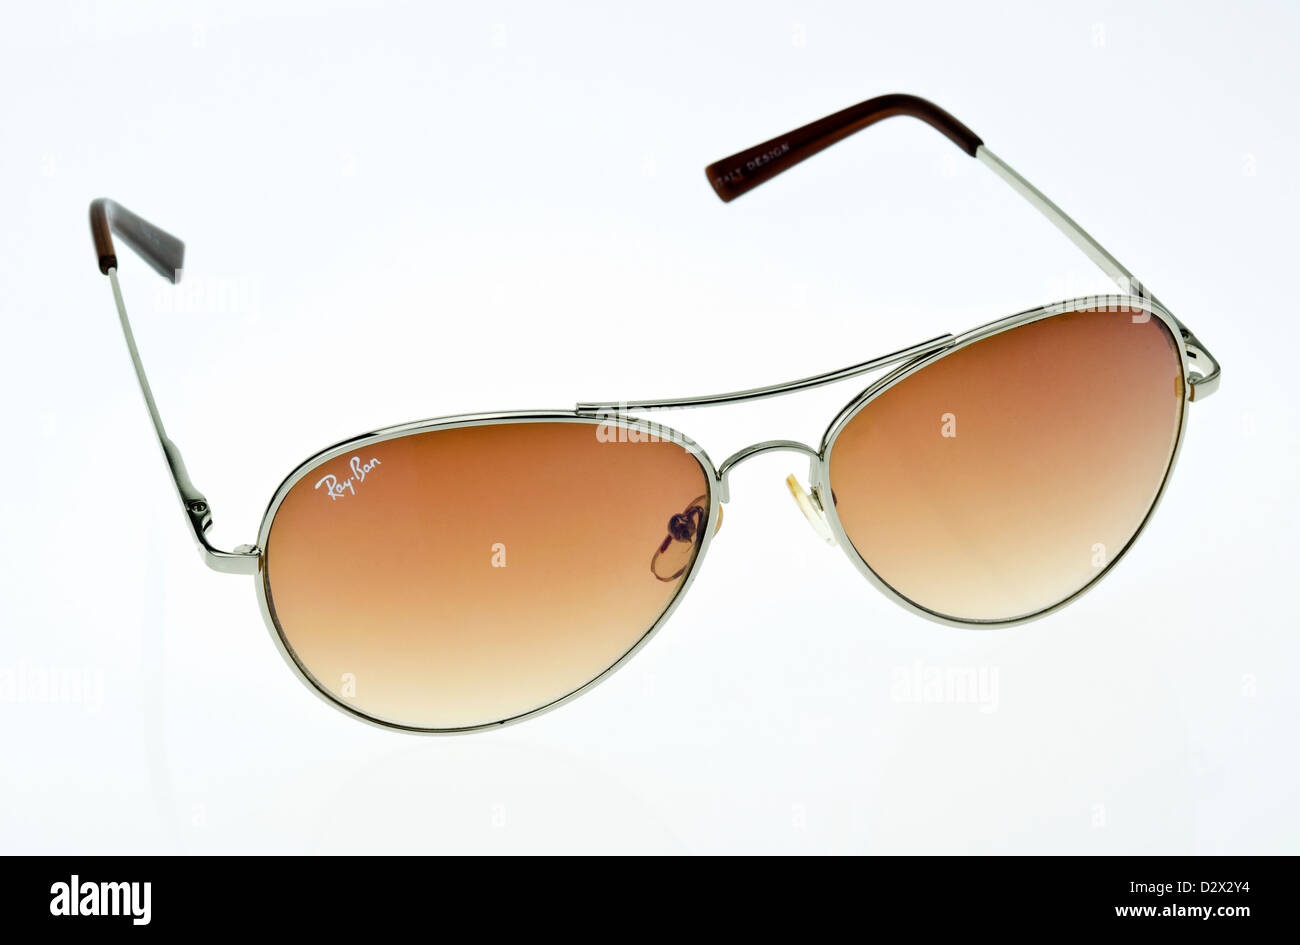 Fake Ray Ban Aviator Sunglasses from China Stock Photo - Alamy